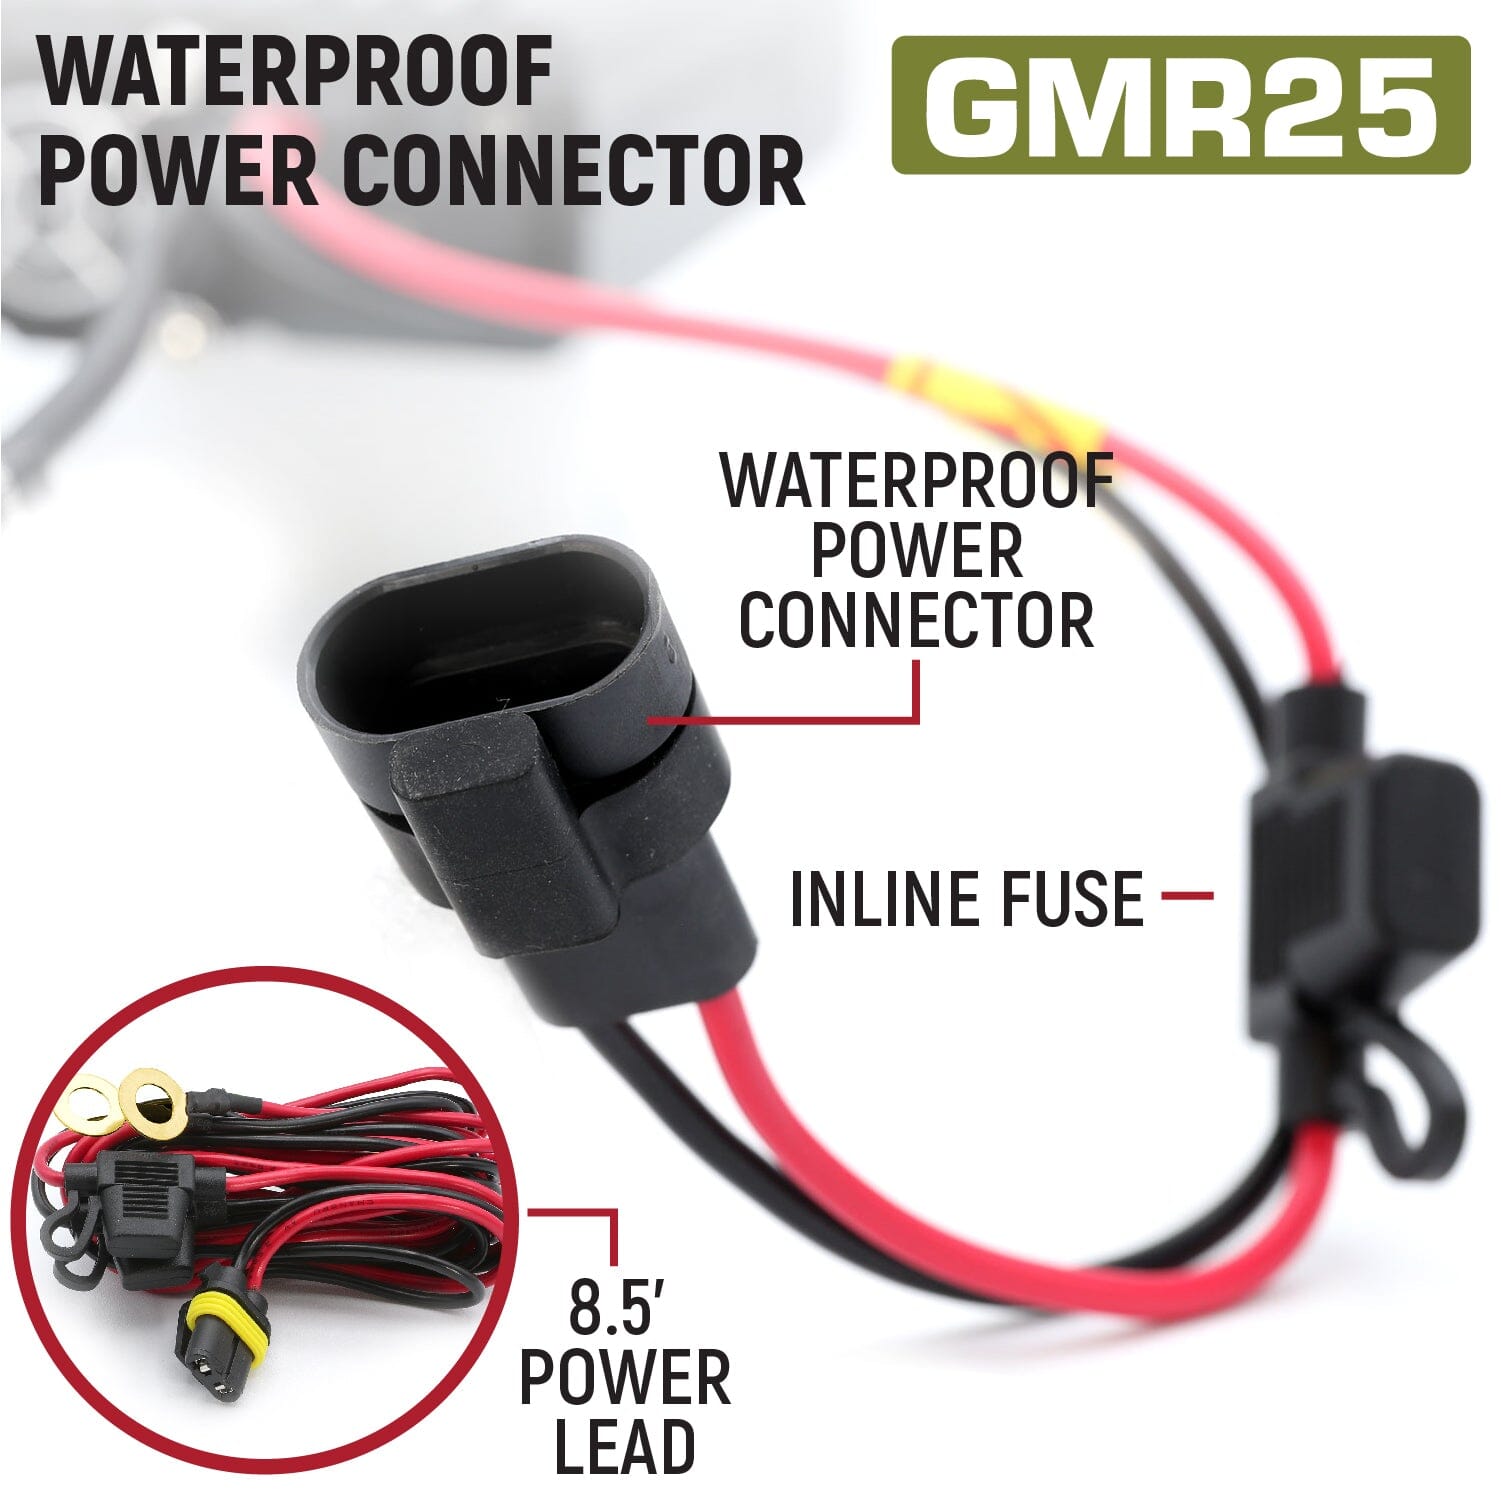 Adventure Radio Kit - GMR25 Waterproof GMRS Mobile Radio Kit and External Speaker